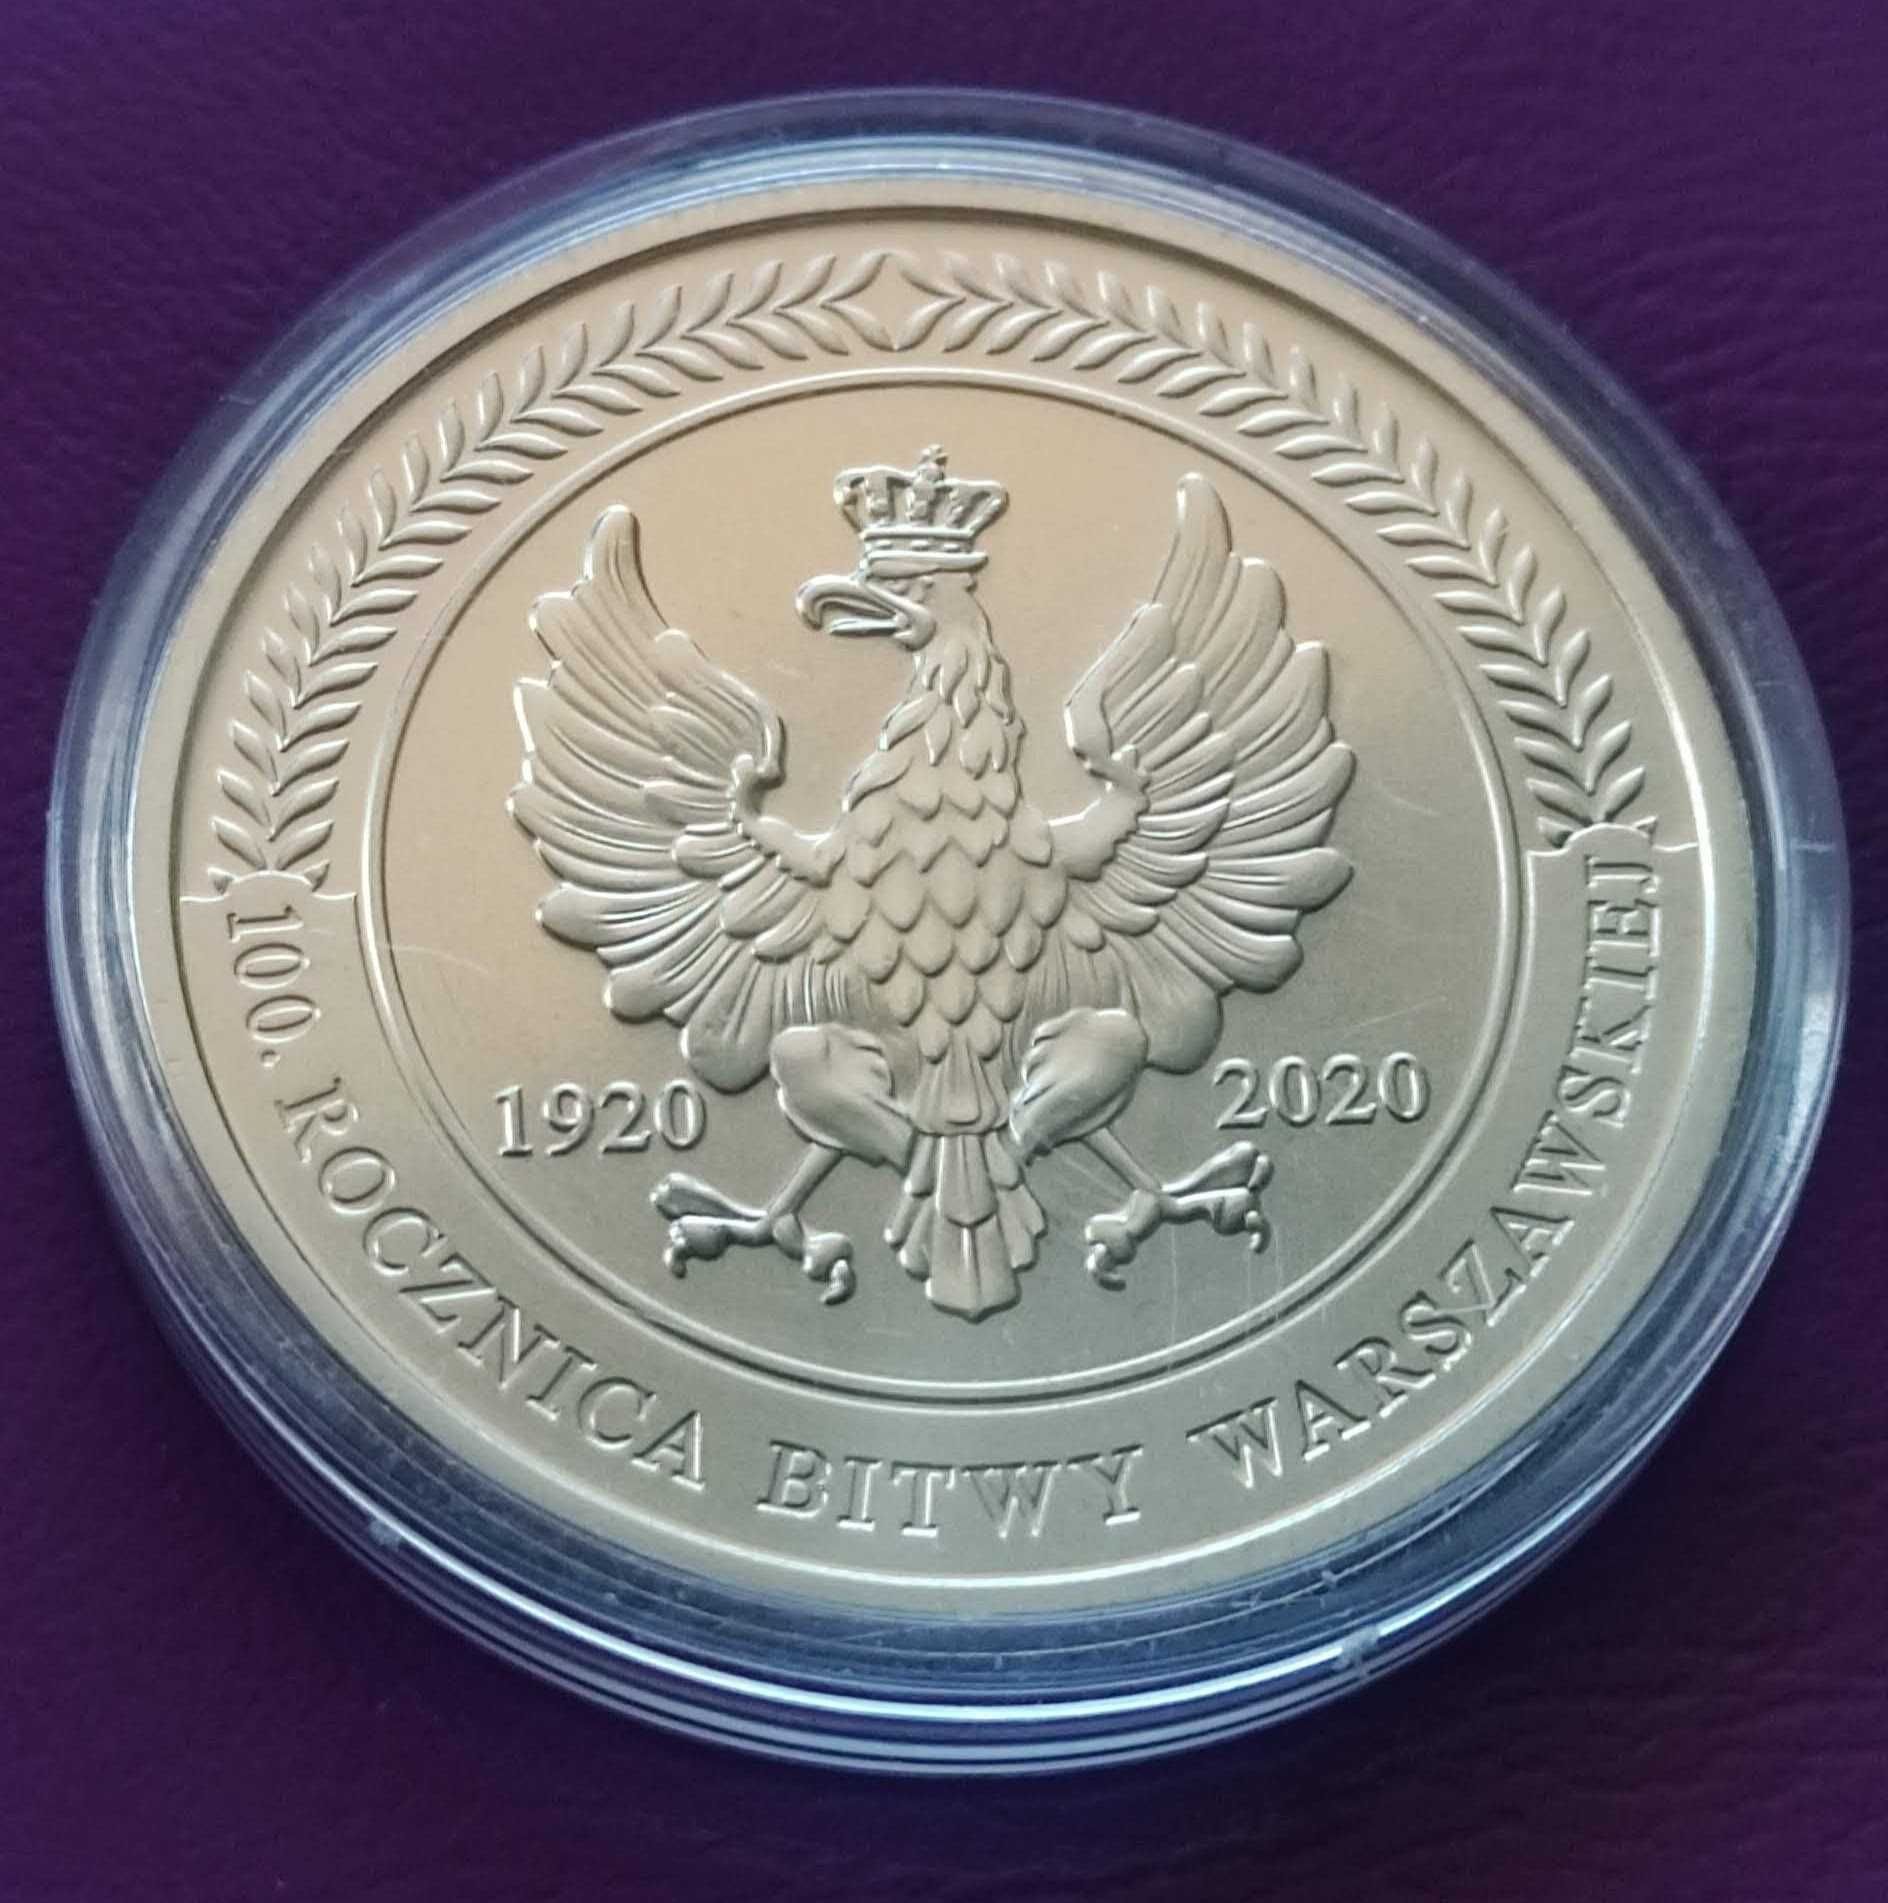 Moneta / numizmat Bitwa Warszawska 1920/2020